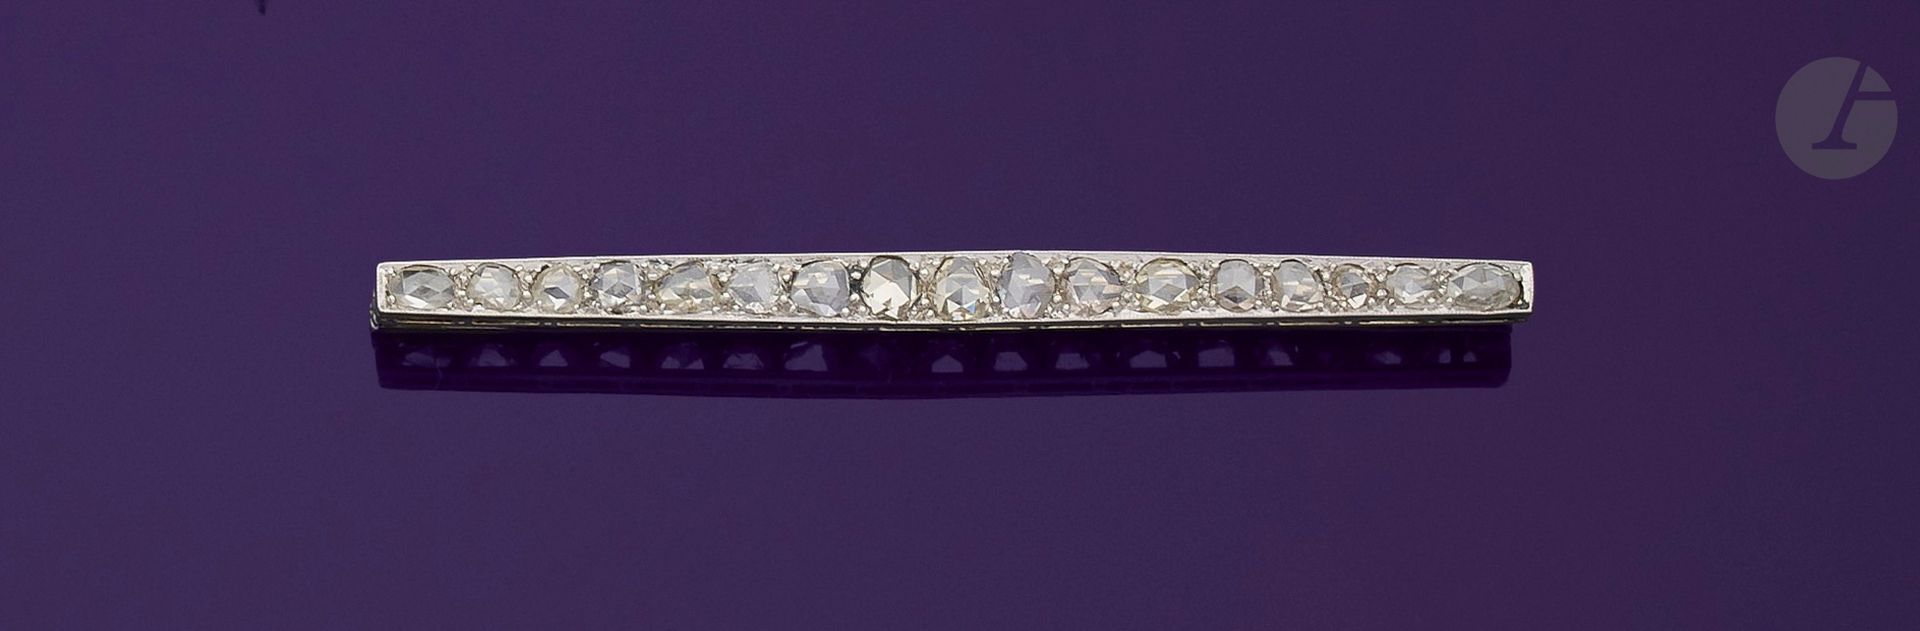 Null 18K（750）白金发夹胸针，镶有一排17颗玫瑰切割钻石。1910年代的作品。长度：约7.5厘米。毛重：5.9克（震惊）。

一枚1910年的钻石胸针